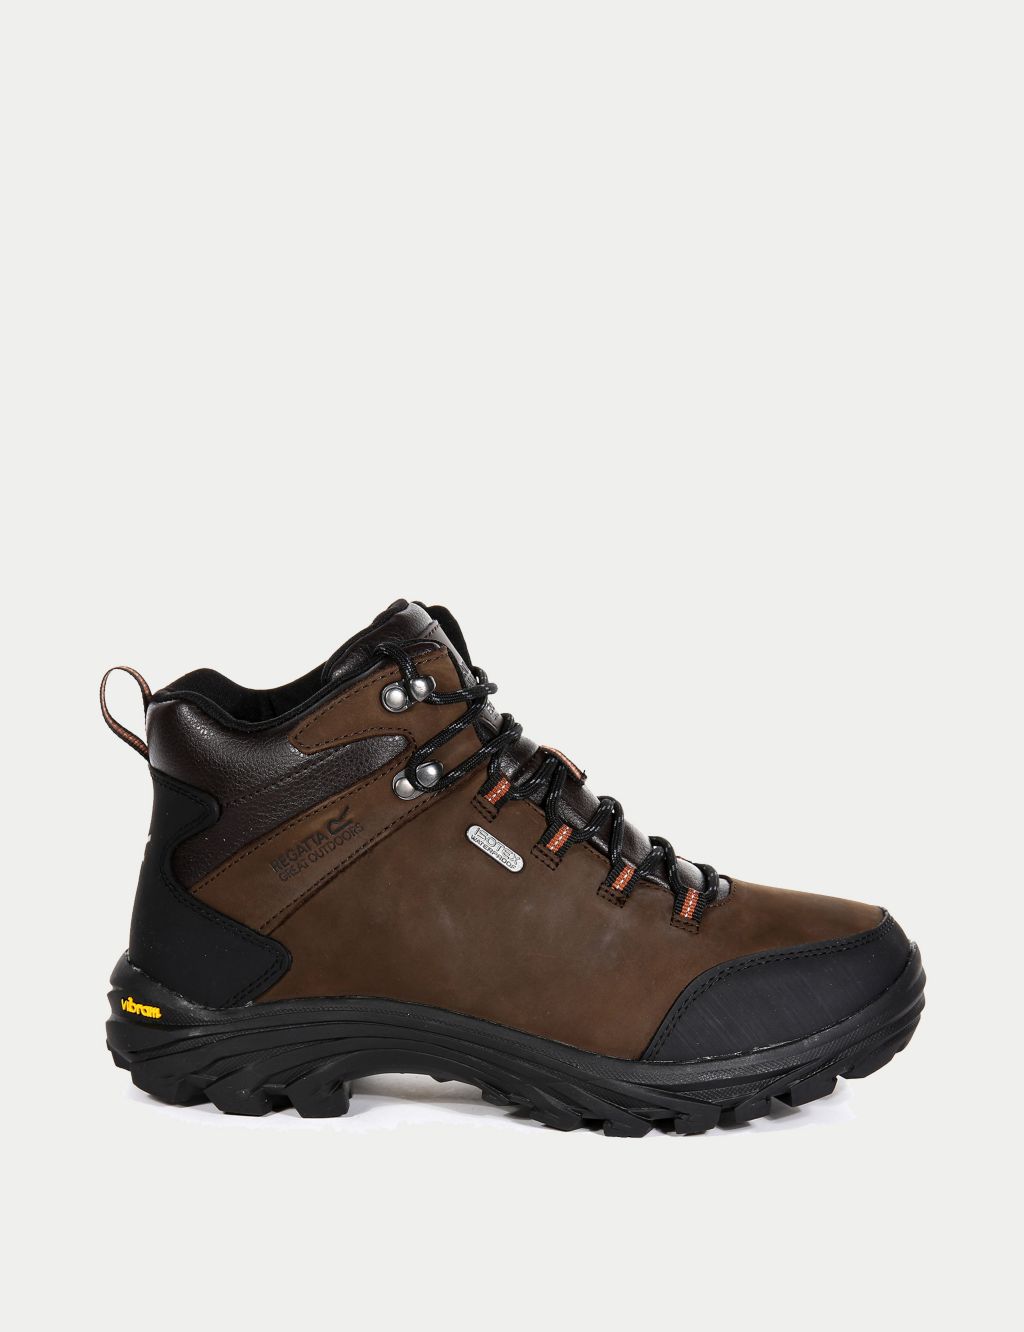 Burrell Leather Waterproof Walking Boots image 1